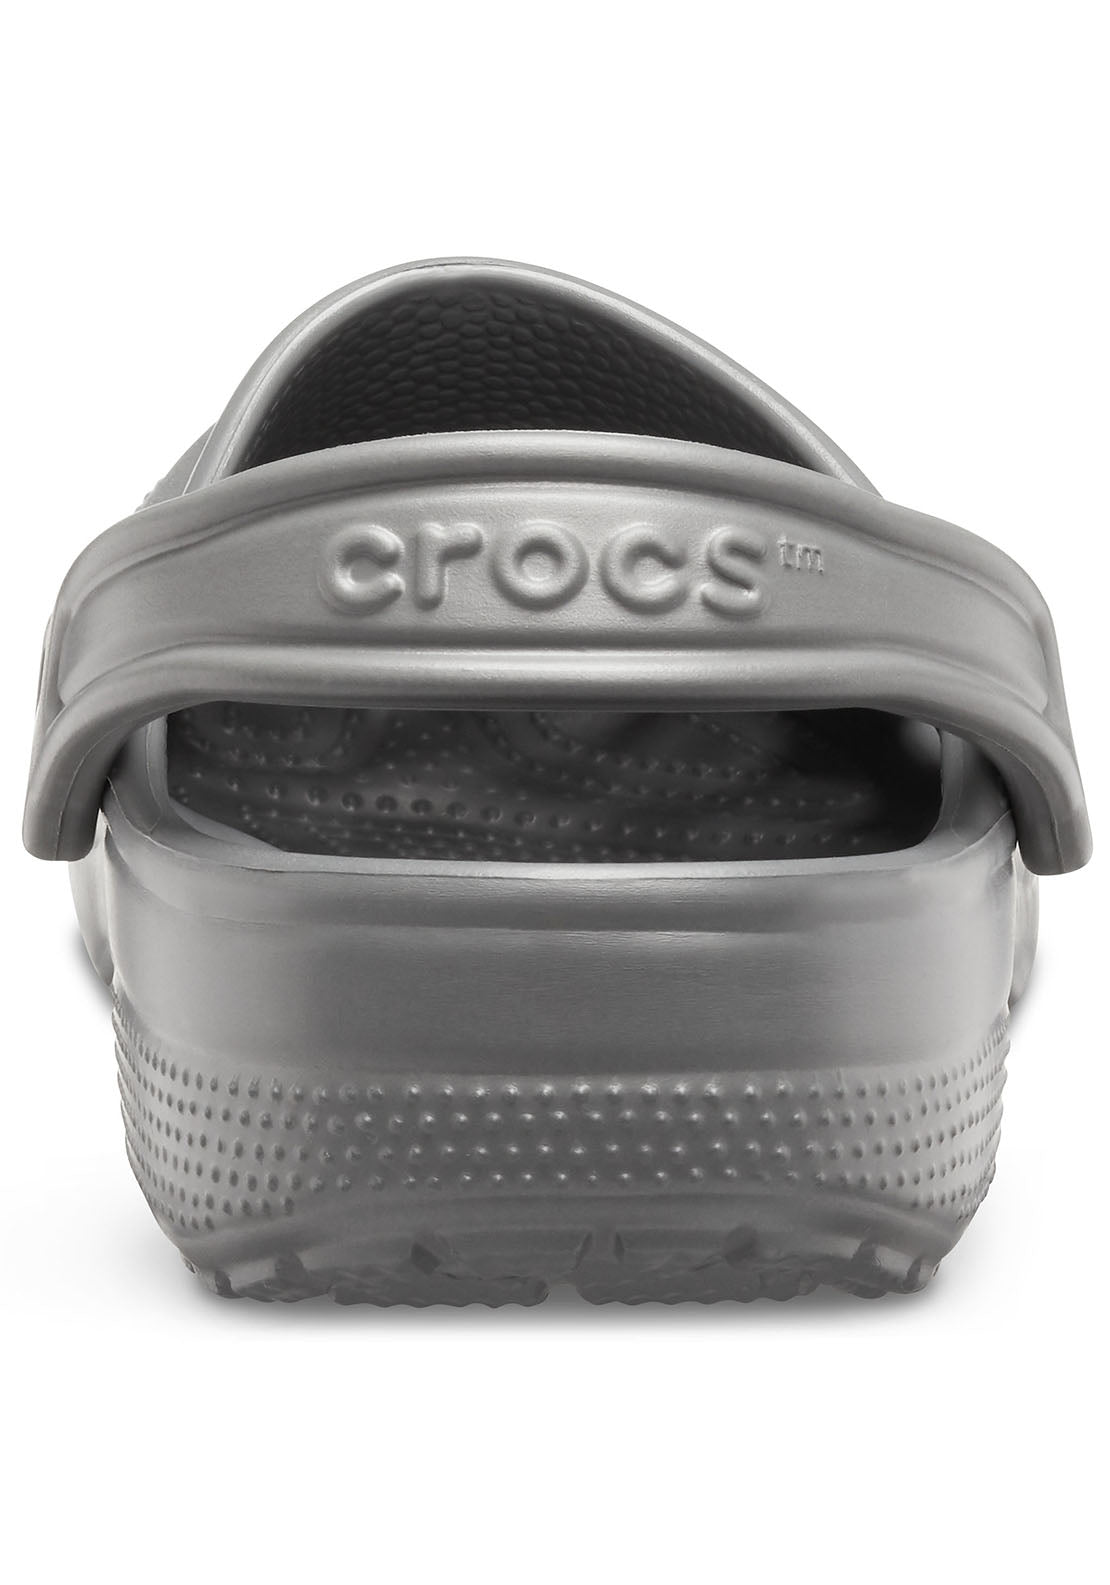 Crocs Classic Clogs 3 Shaws Department Stores